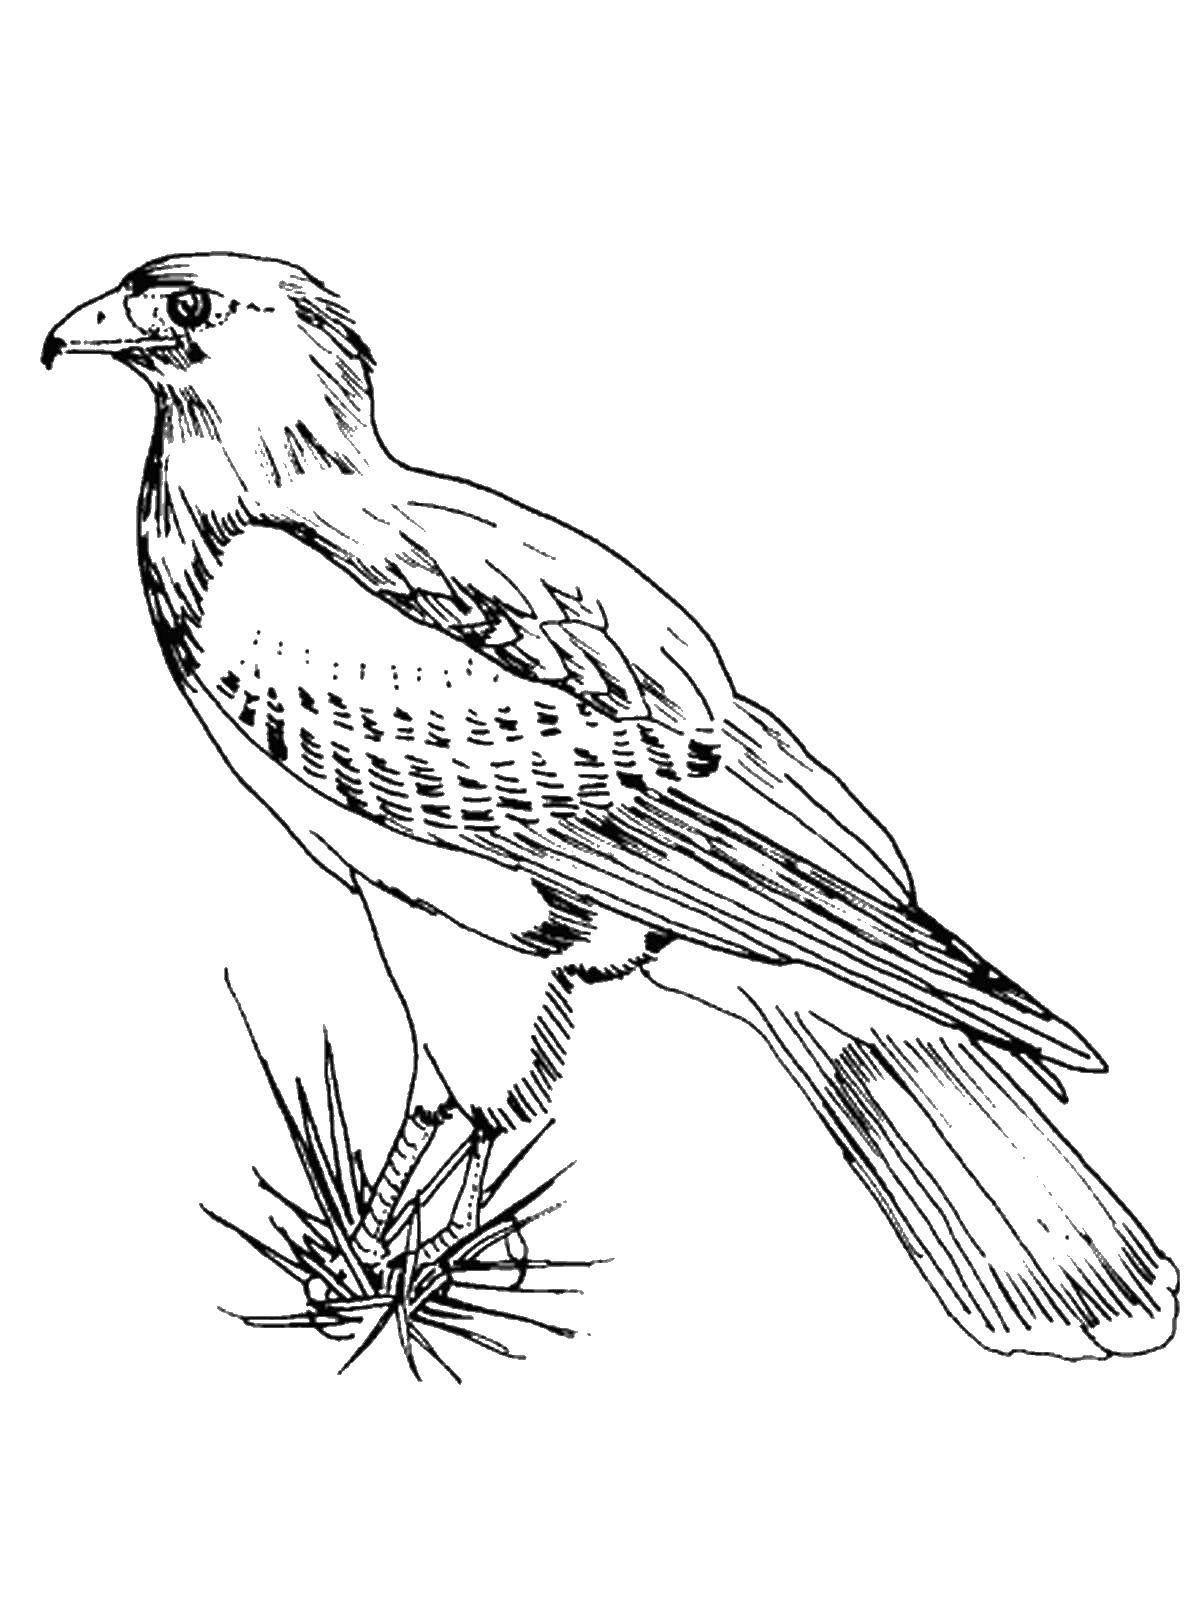 Coloring Falcon. Category birds. Tags:  , Falcon, .